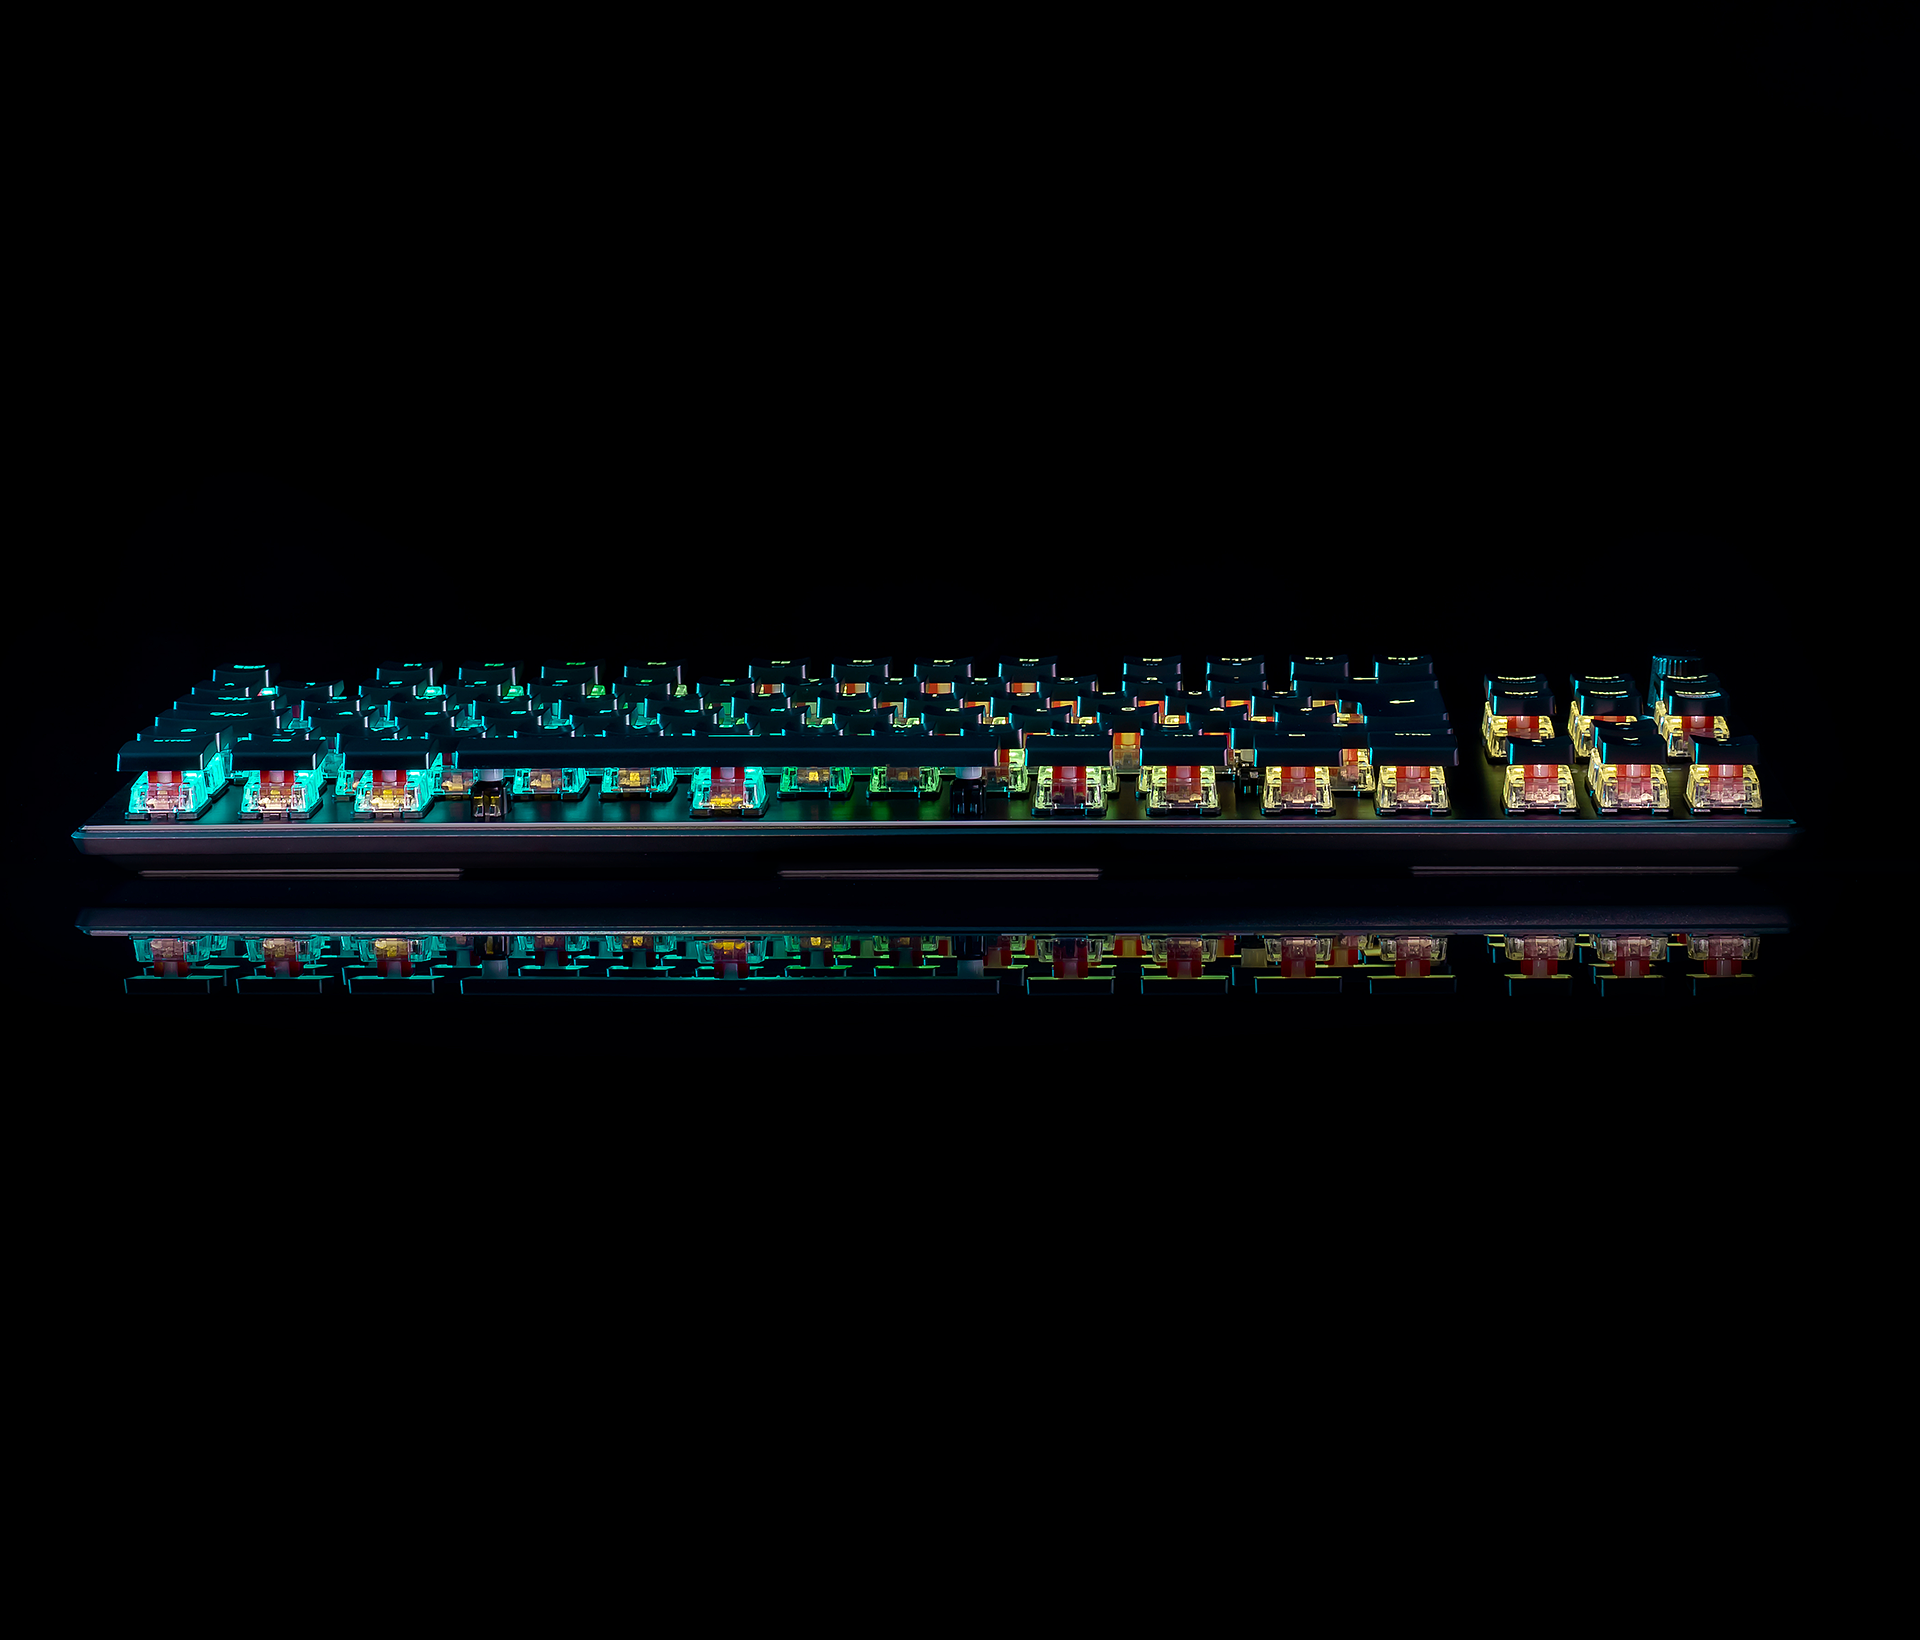 Vulcan TKL Pro, Compact Optical RGB Gaming Keyboard